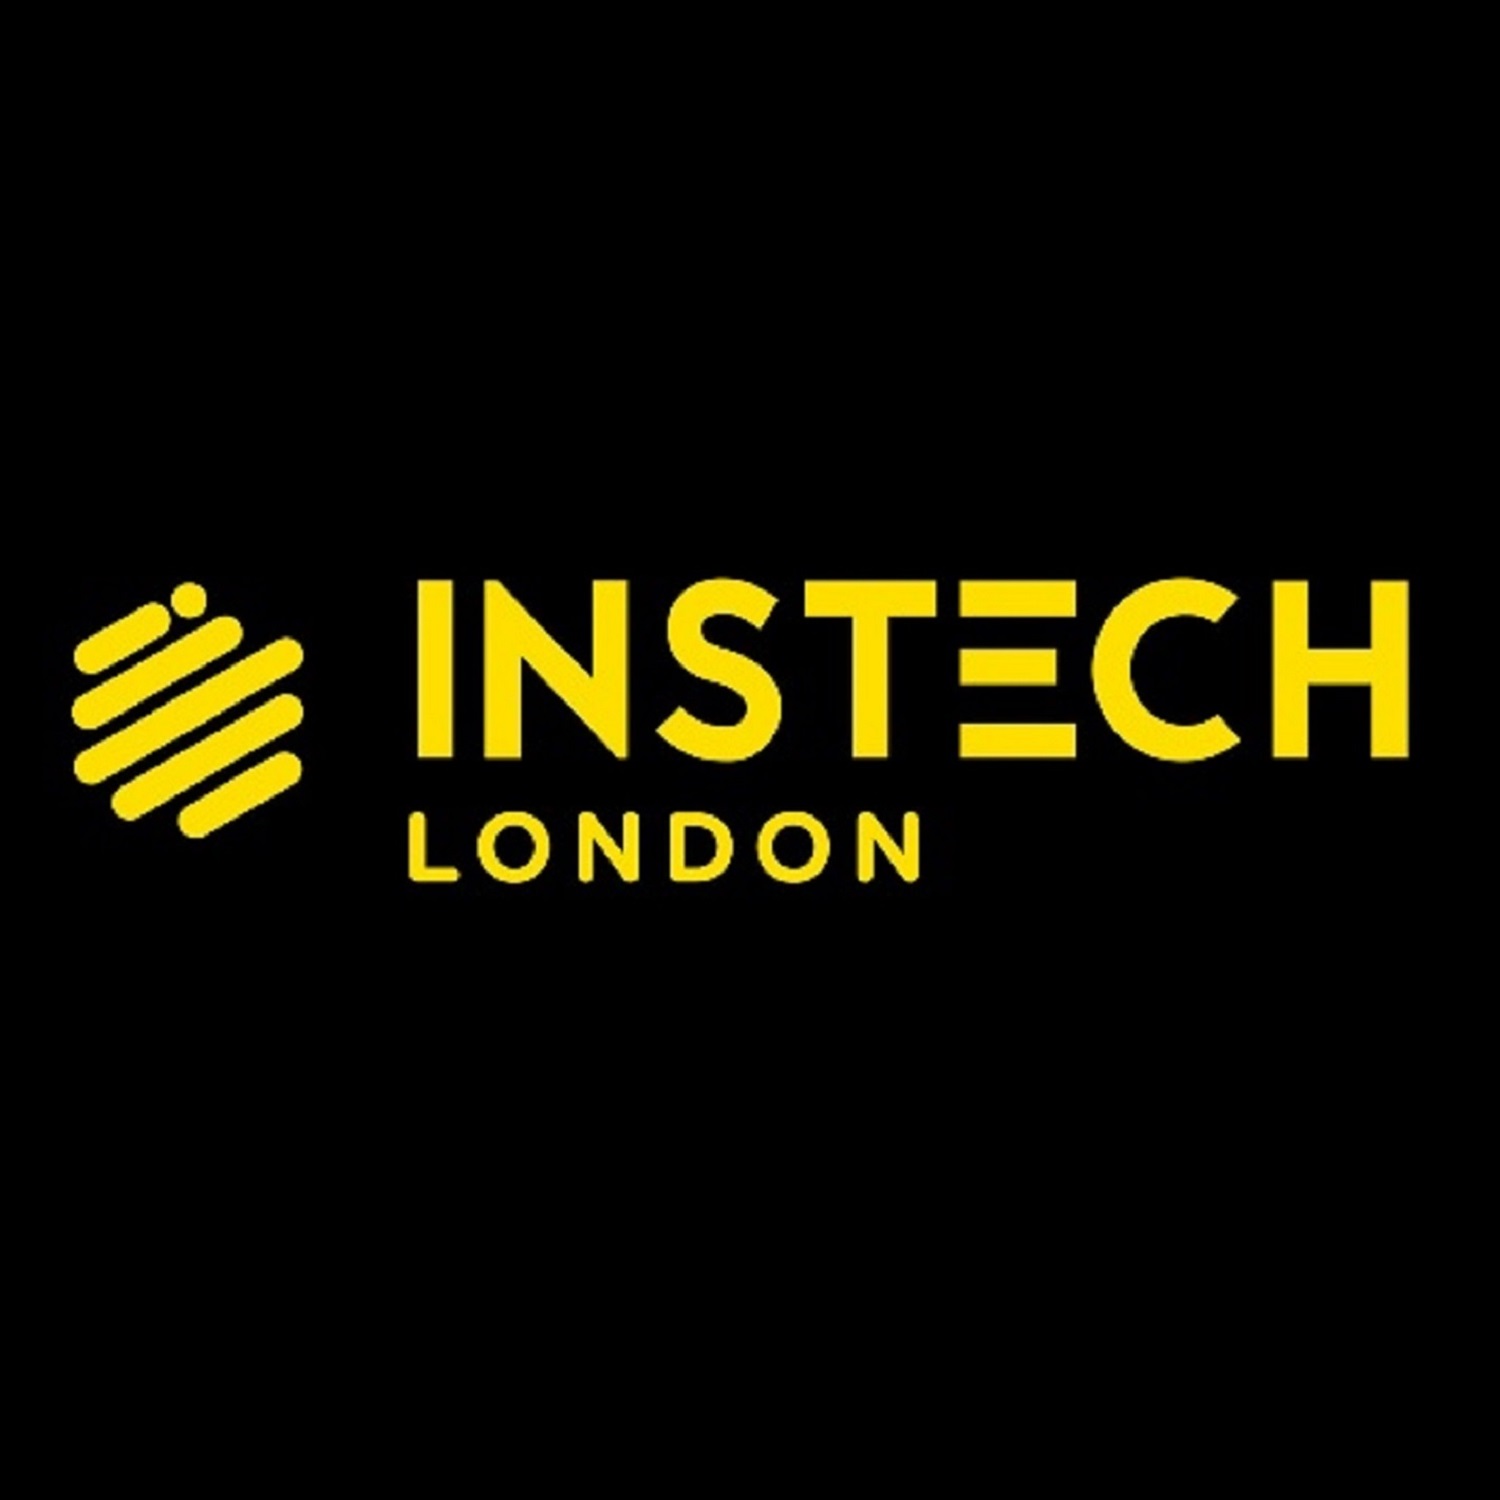 InsTech London Podcast 2 - Justin Emrich & Gary Nuttall